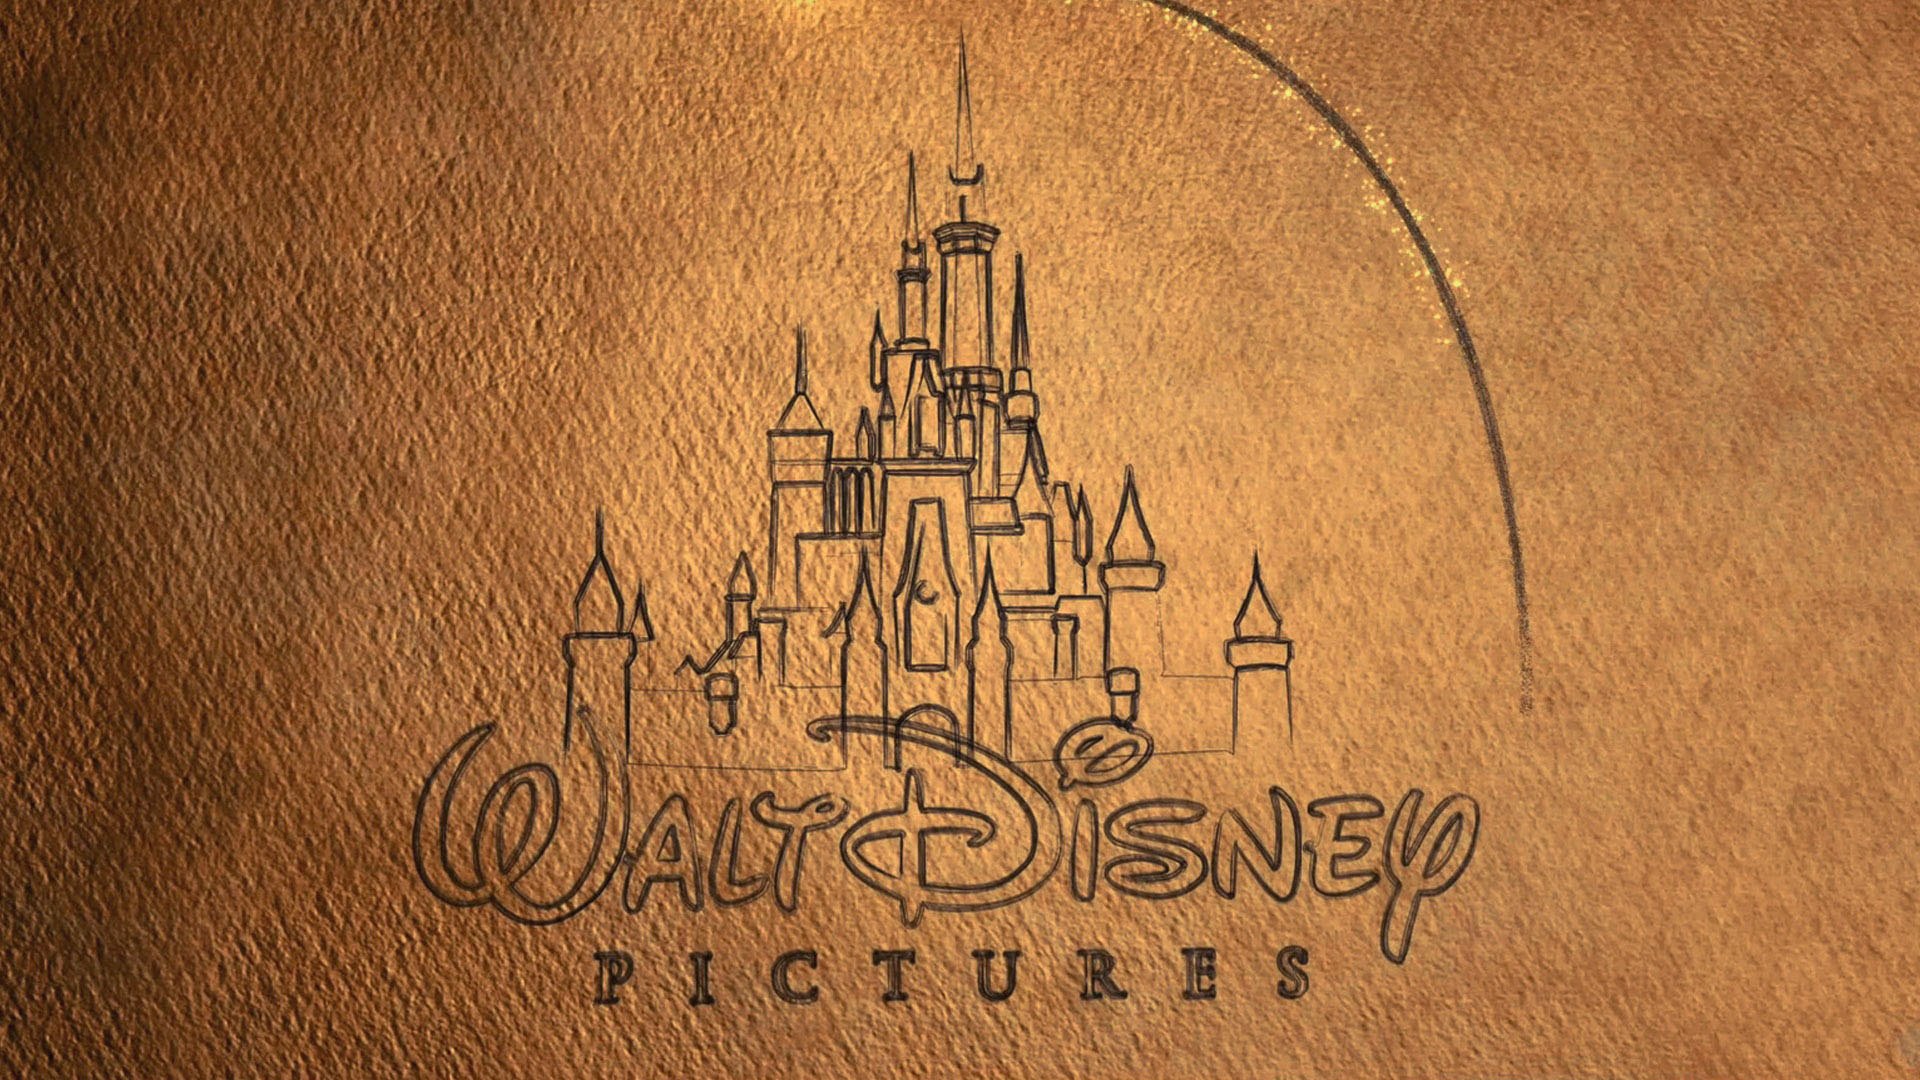 Эскиз заставки для телепередачи. Логотип Уолт Дисней замок. Замок Уолт Дисней пикчеус. Замок Уолт Дисней Пикчерз лого. Walt Disney pictures логотип замок.